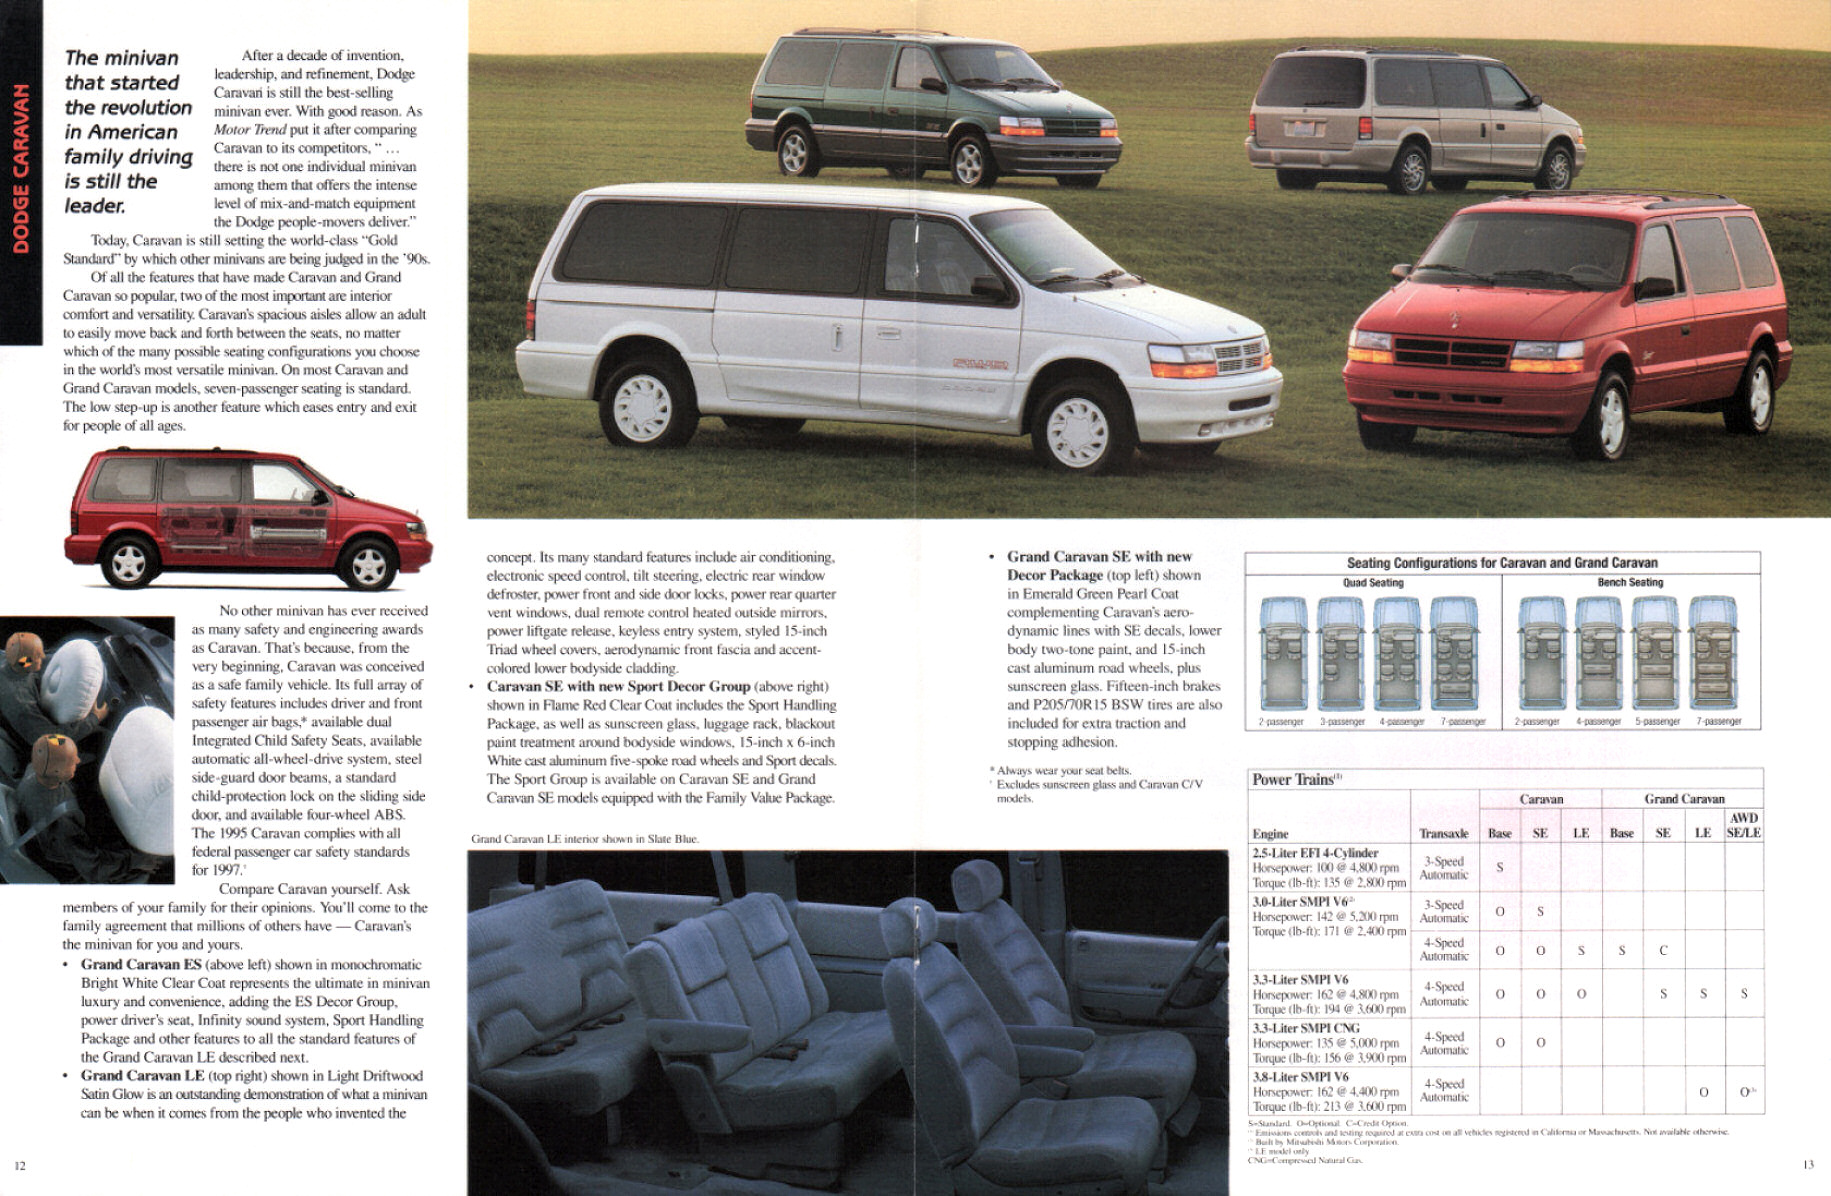 1995_Dodge_Cars__Trucks-12-13